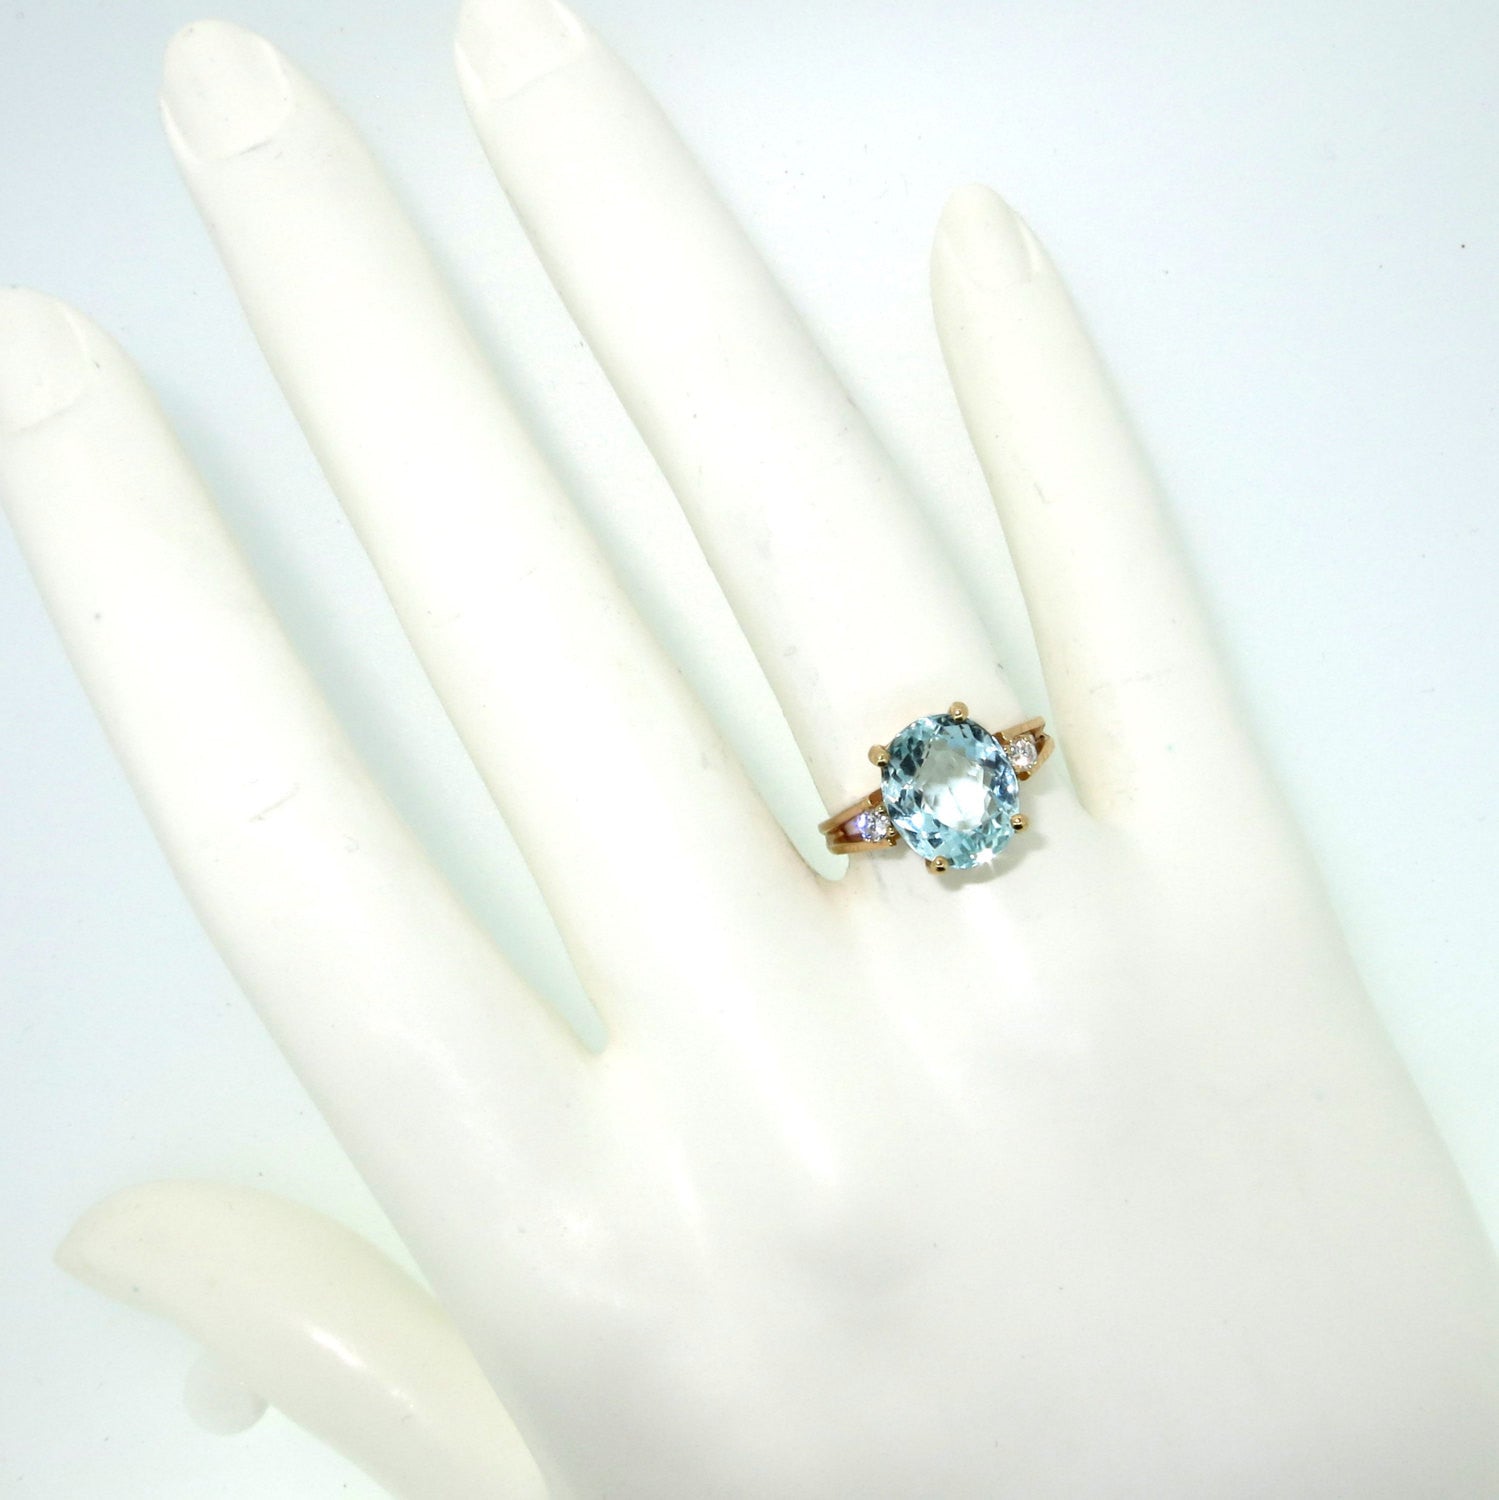 SALE! Aquamarine Gemstone & Diamond Cocktail Ring, Engagement Ring